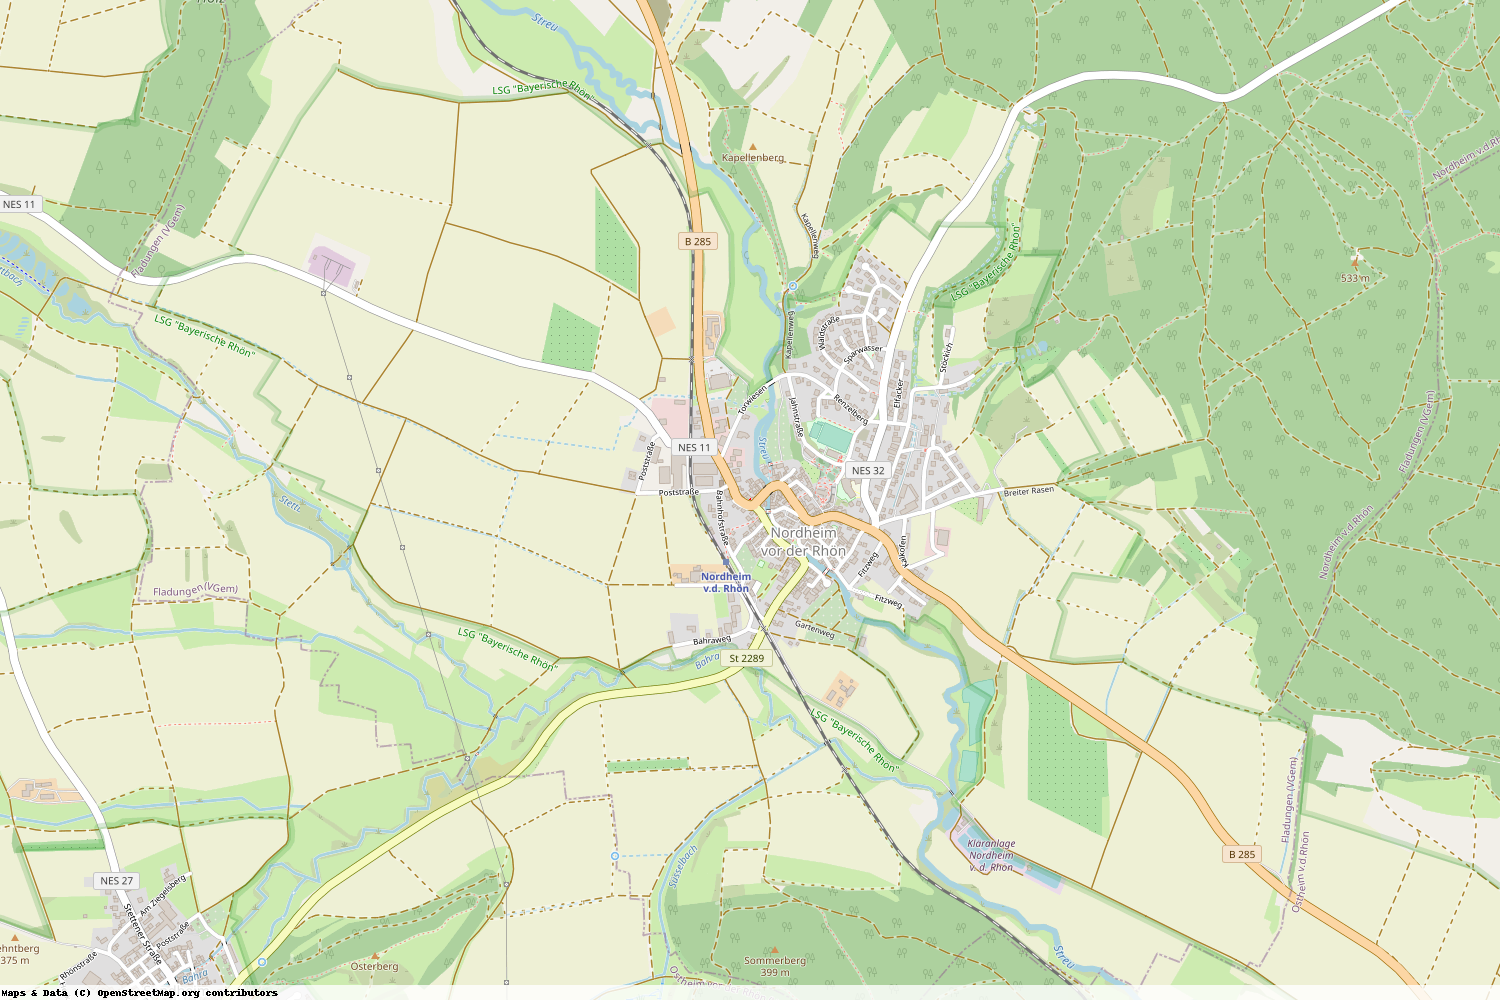 Ist gerade Stromausfall in Bayern - Rhön-Grabfeld - Nordheim v.d. Rhön?